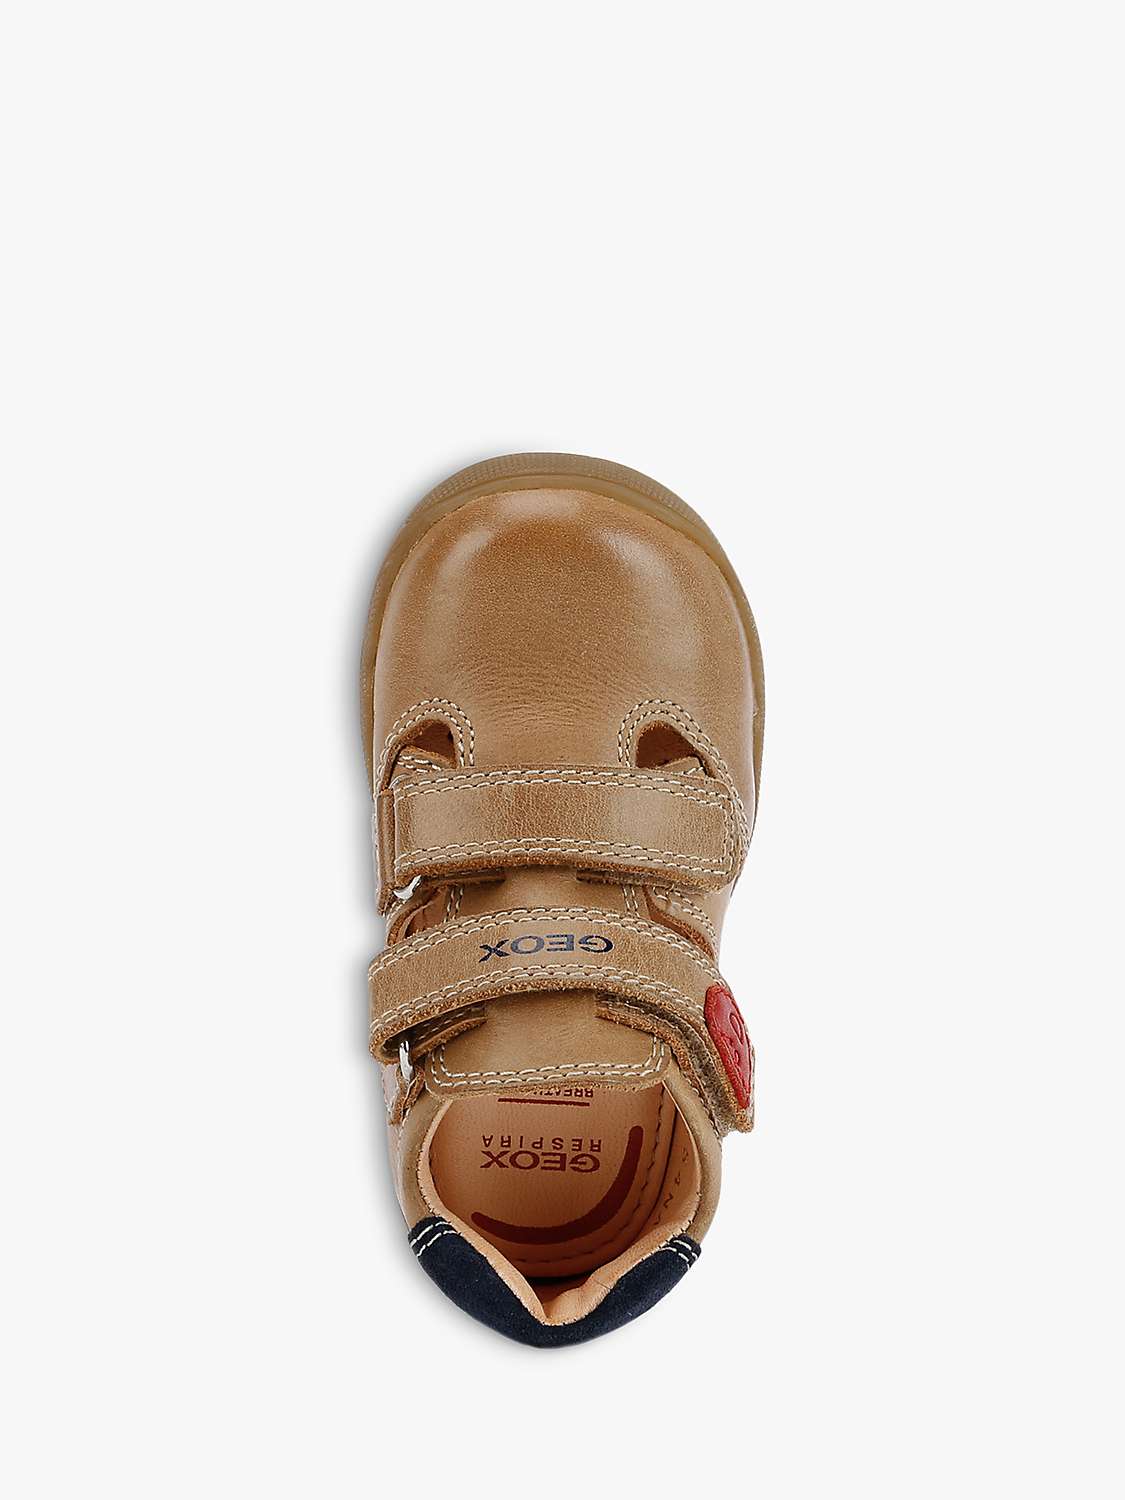 Buy Geox Kids' Macchia Riptape Sandals Online at johnlewis.com